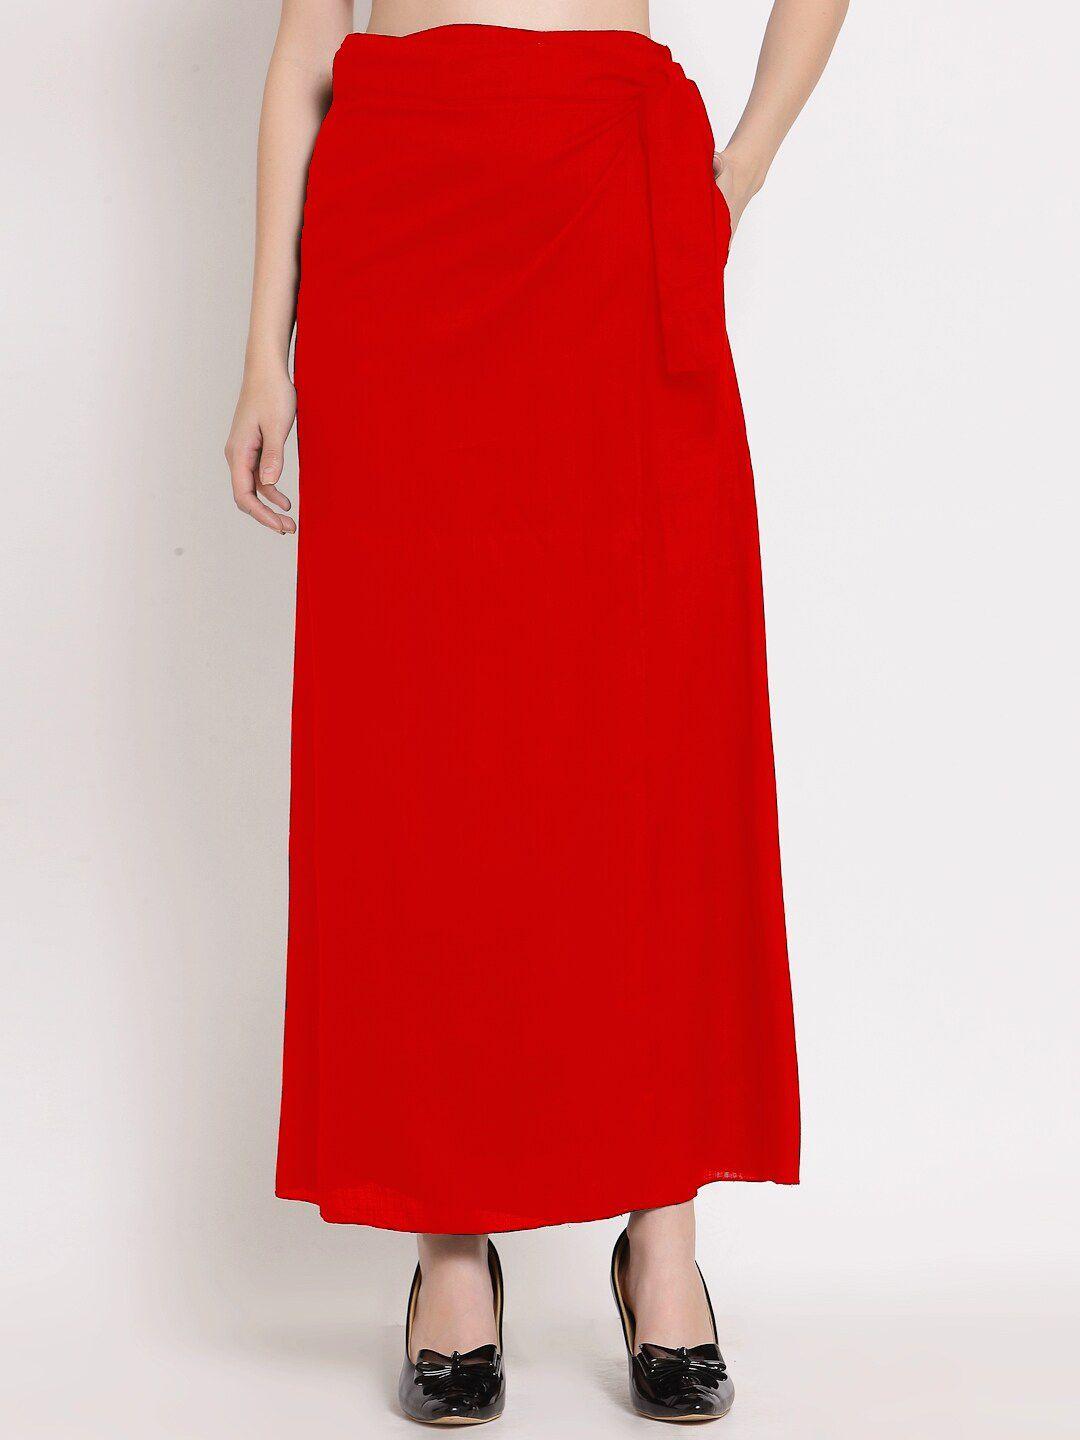 PATRORNA Red Skirts